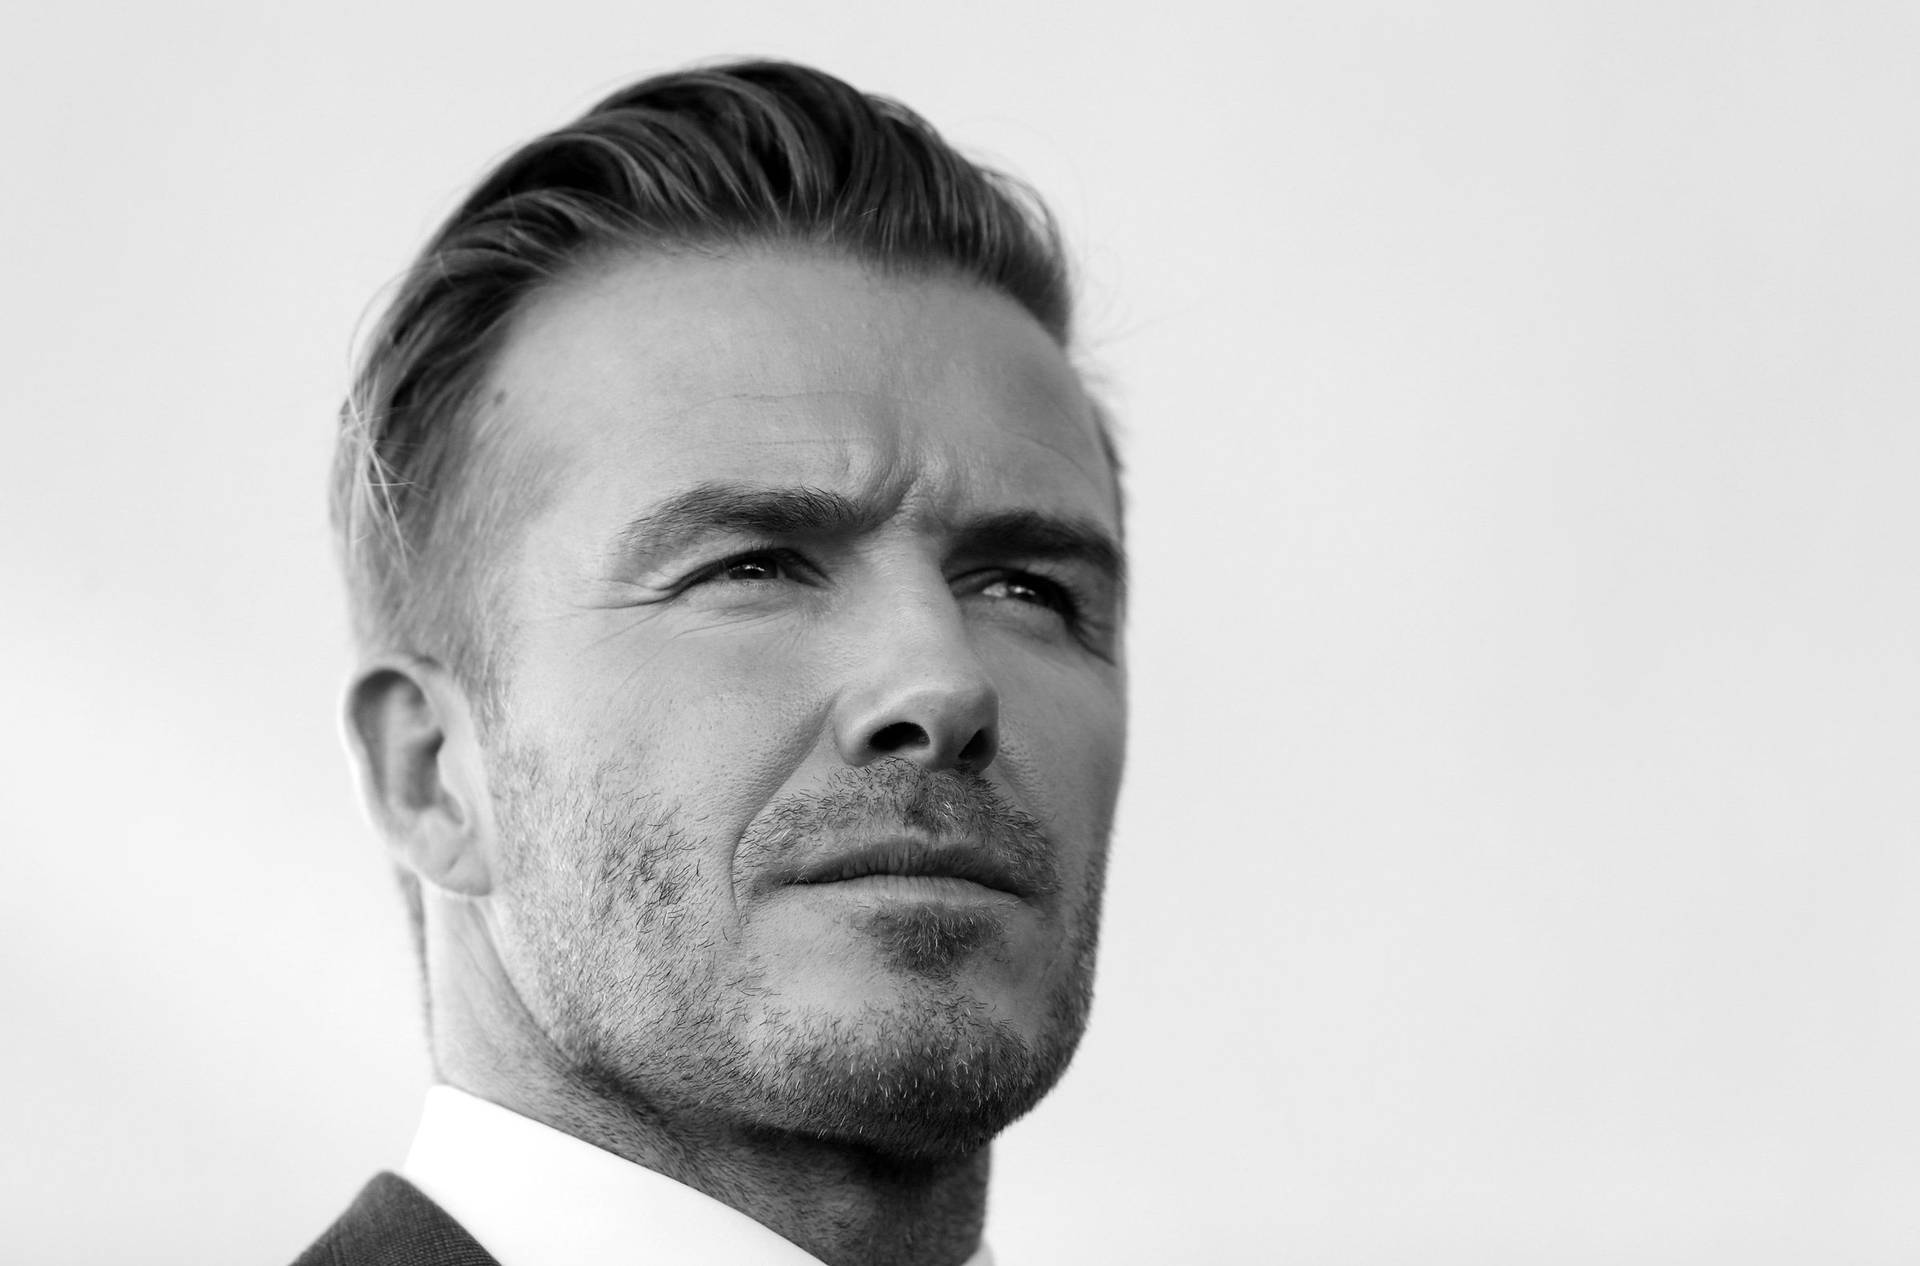 David Beckham Looking Dapper In Black And White Background